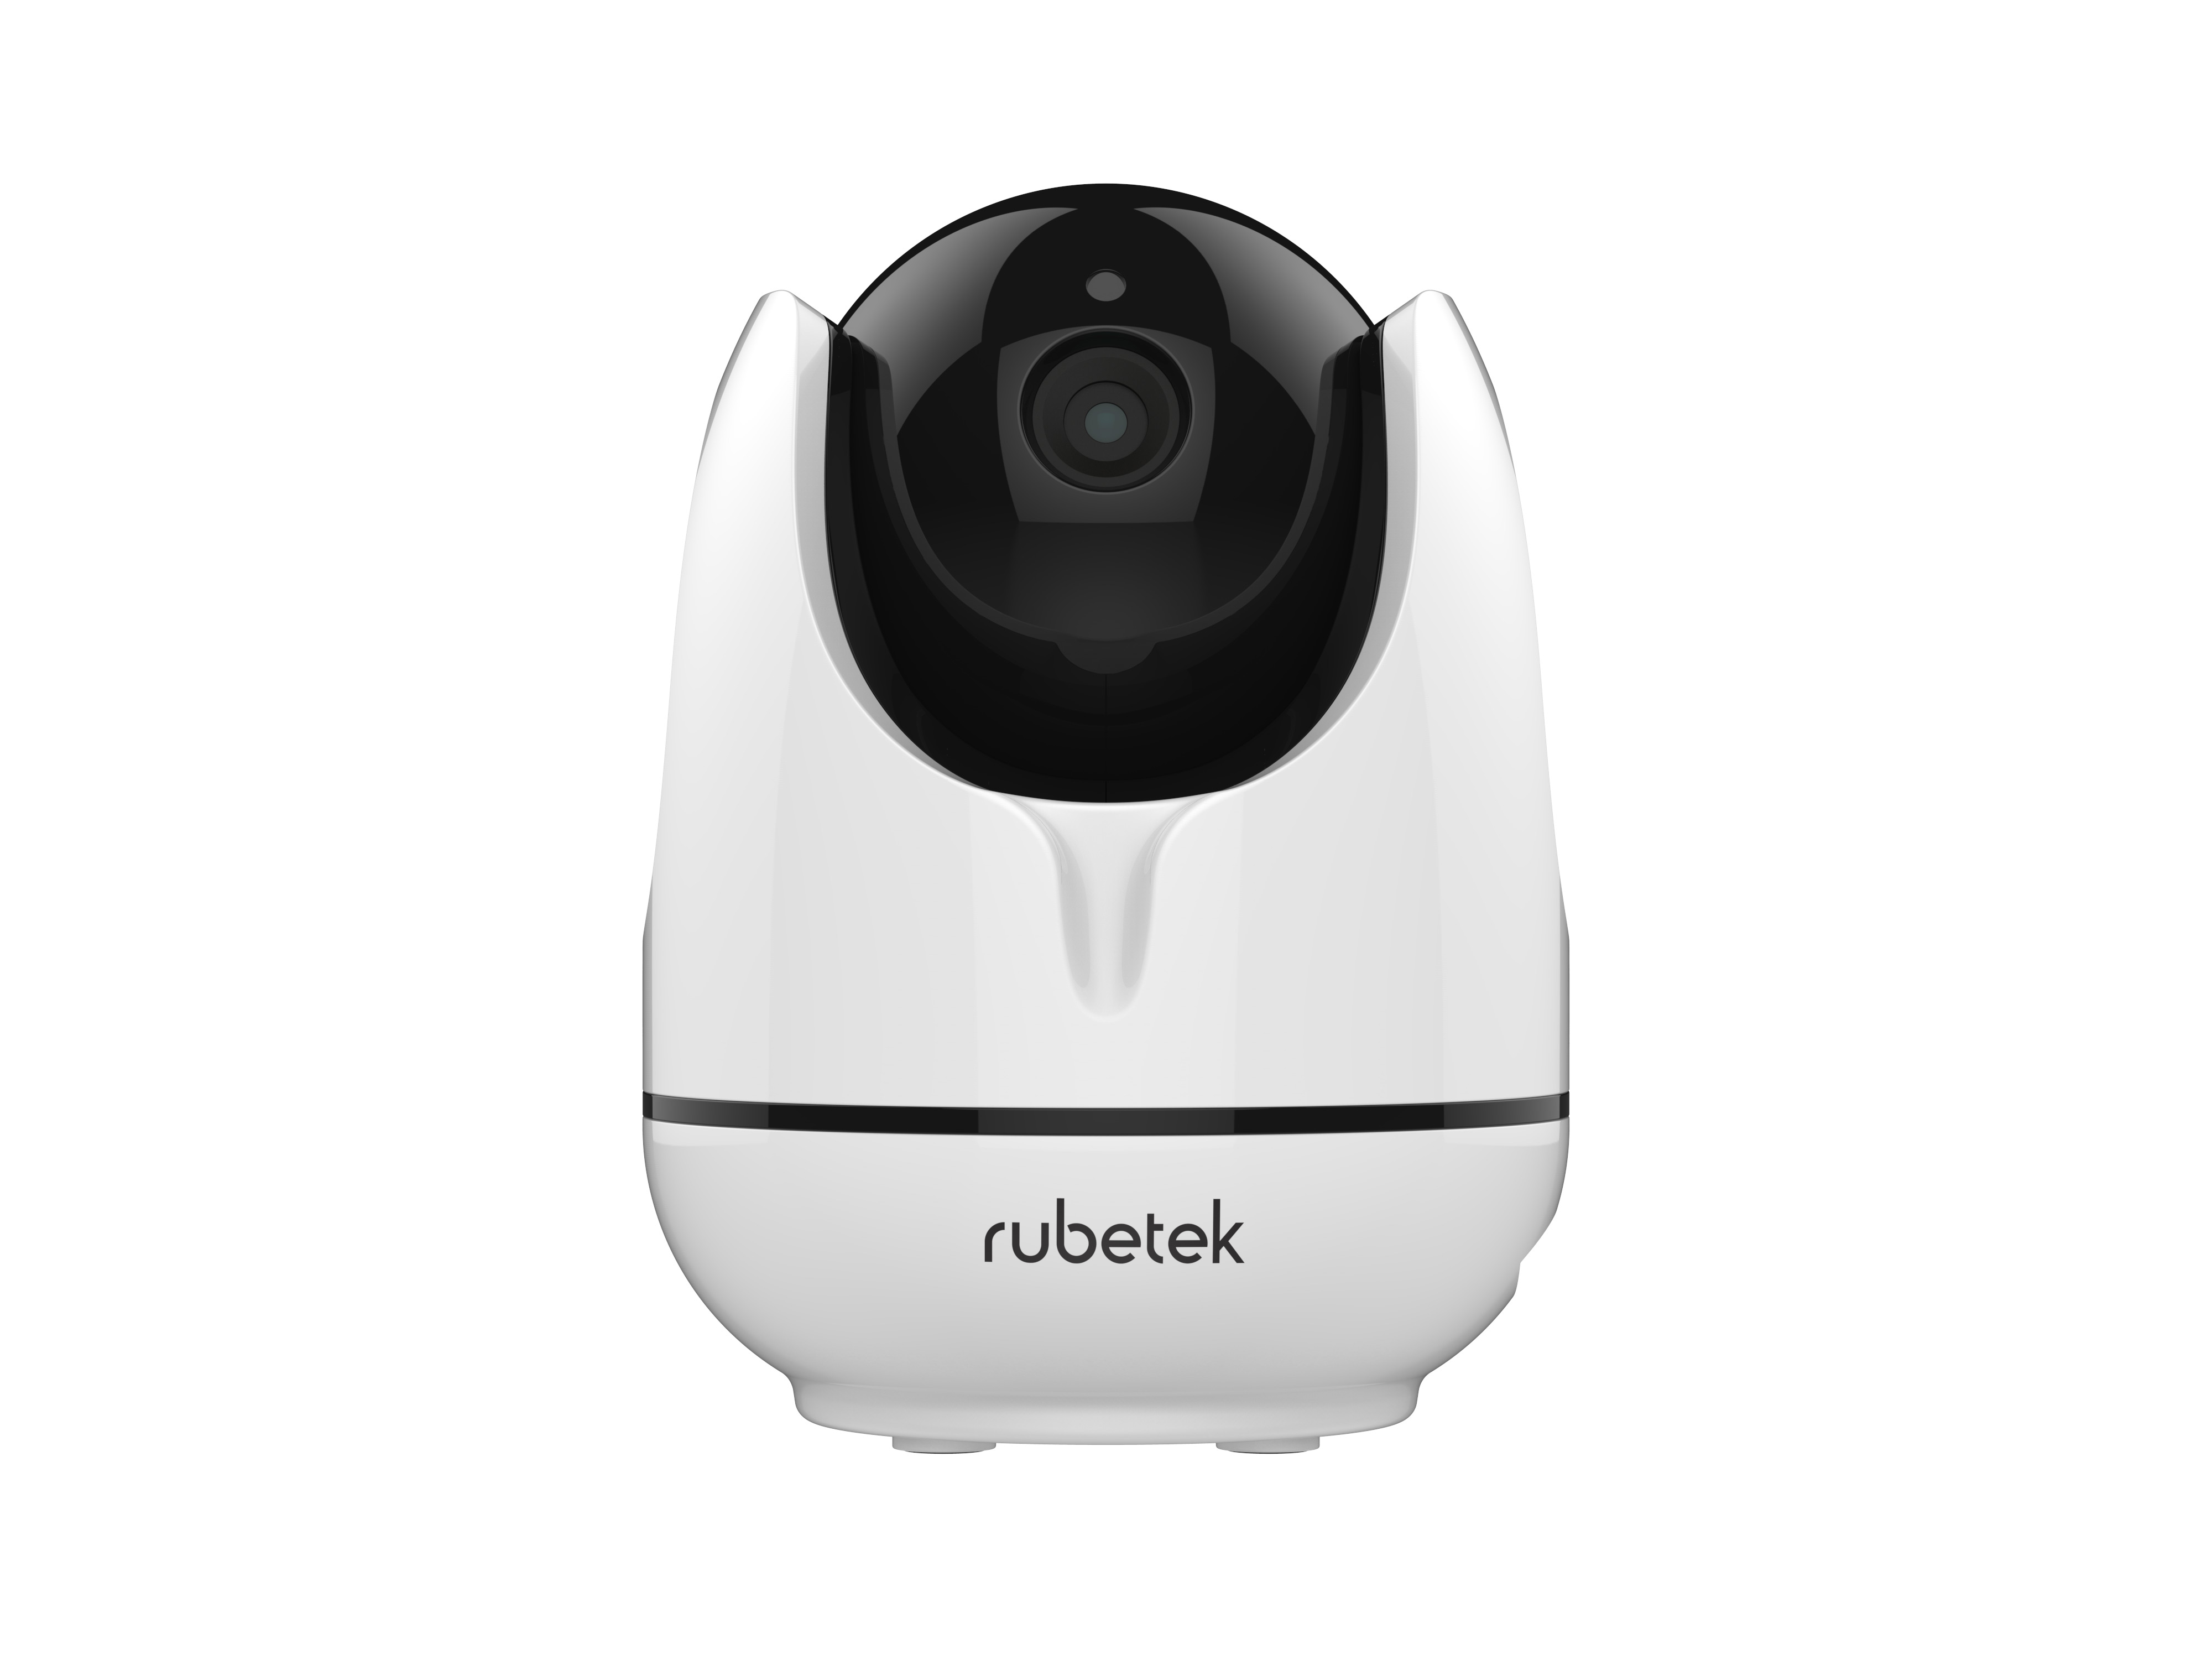 IP-видеокамера rubetek RV-3404 уже в продаже!